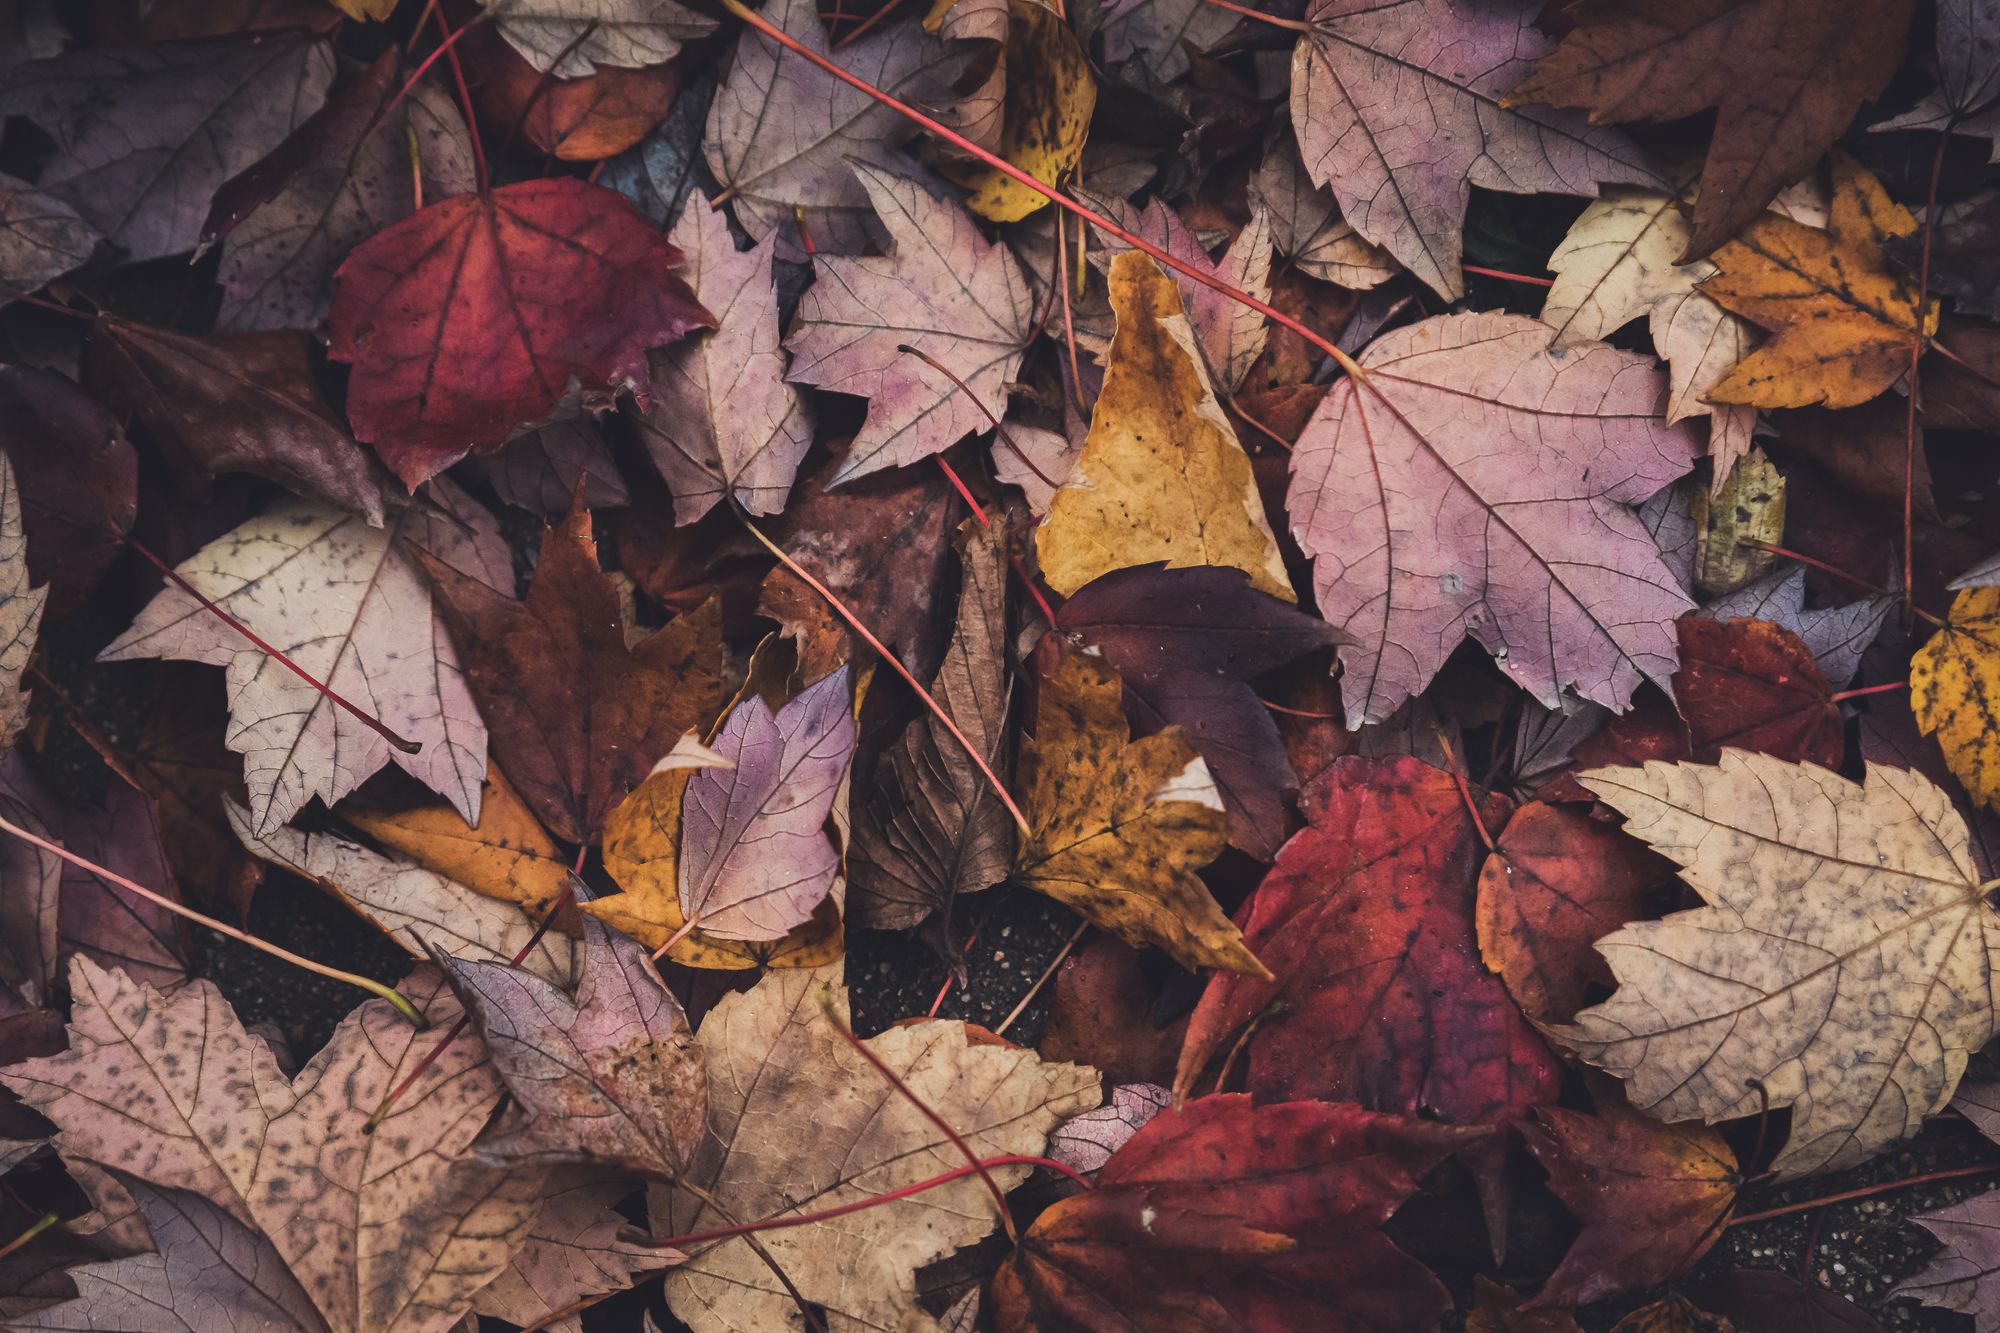 Autumn Leaves Free Stock Image